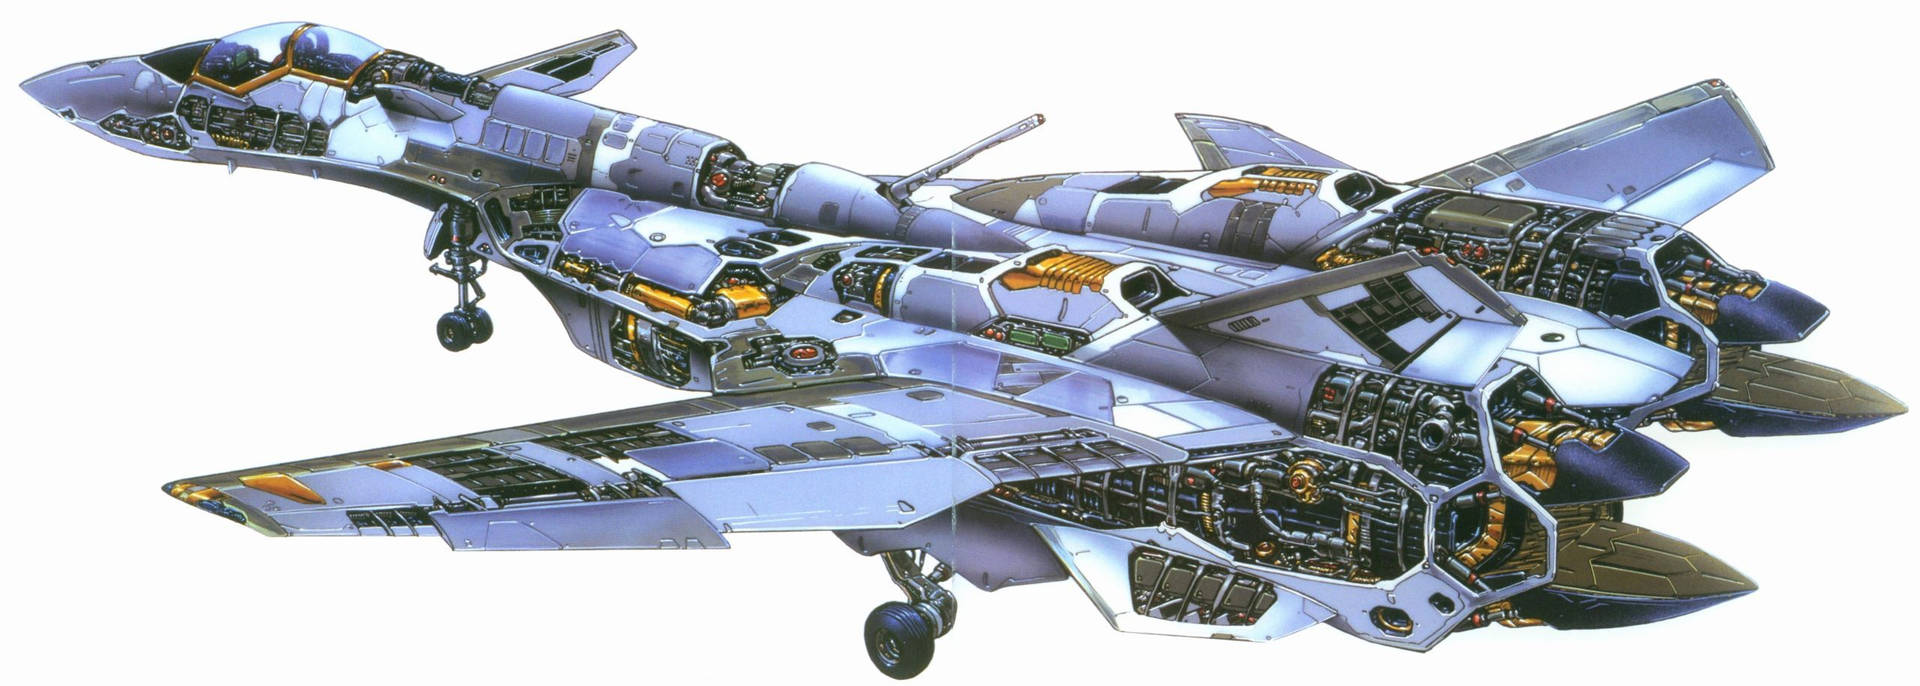 Macross Jet Model Background